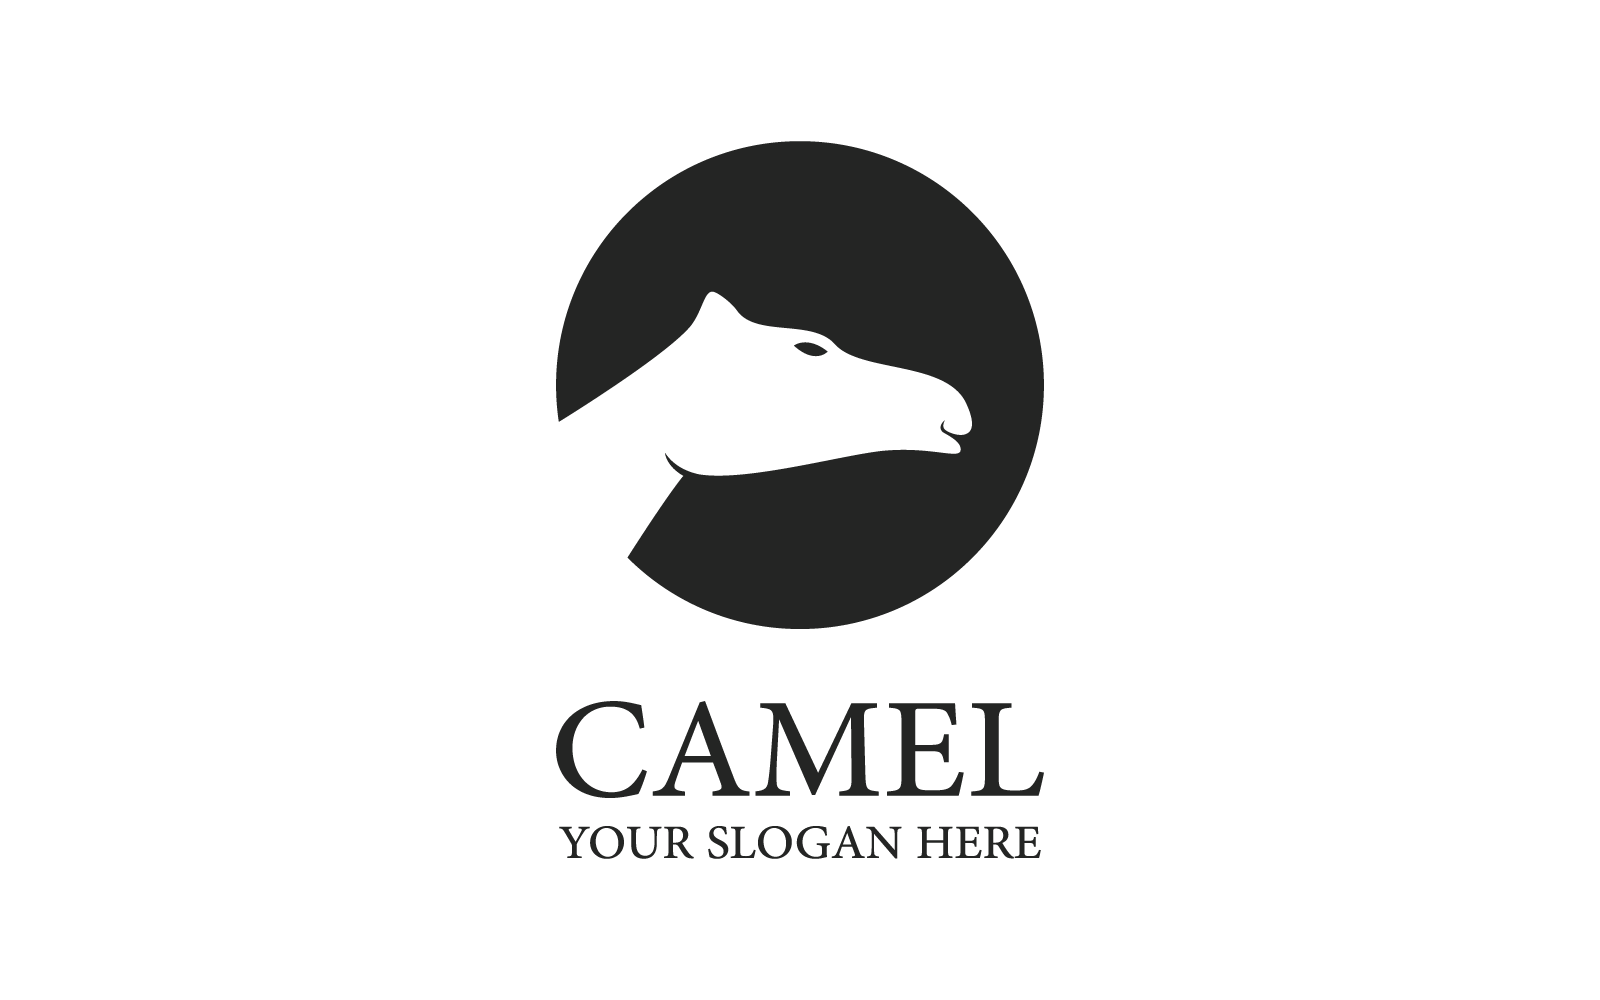 Camel illustration flat design logo template Logo Template